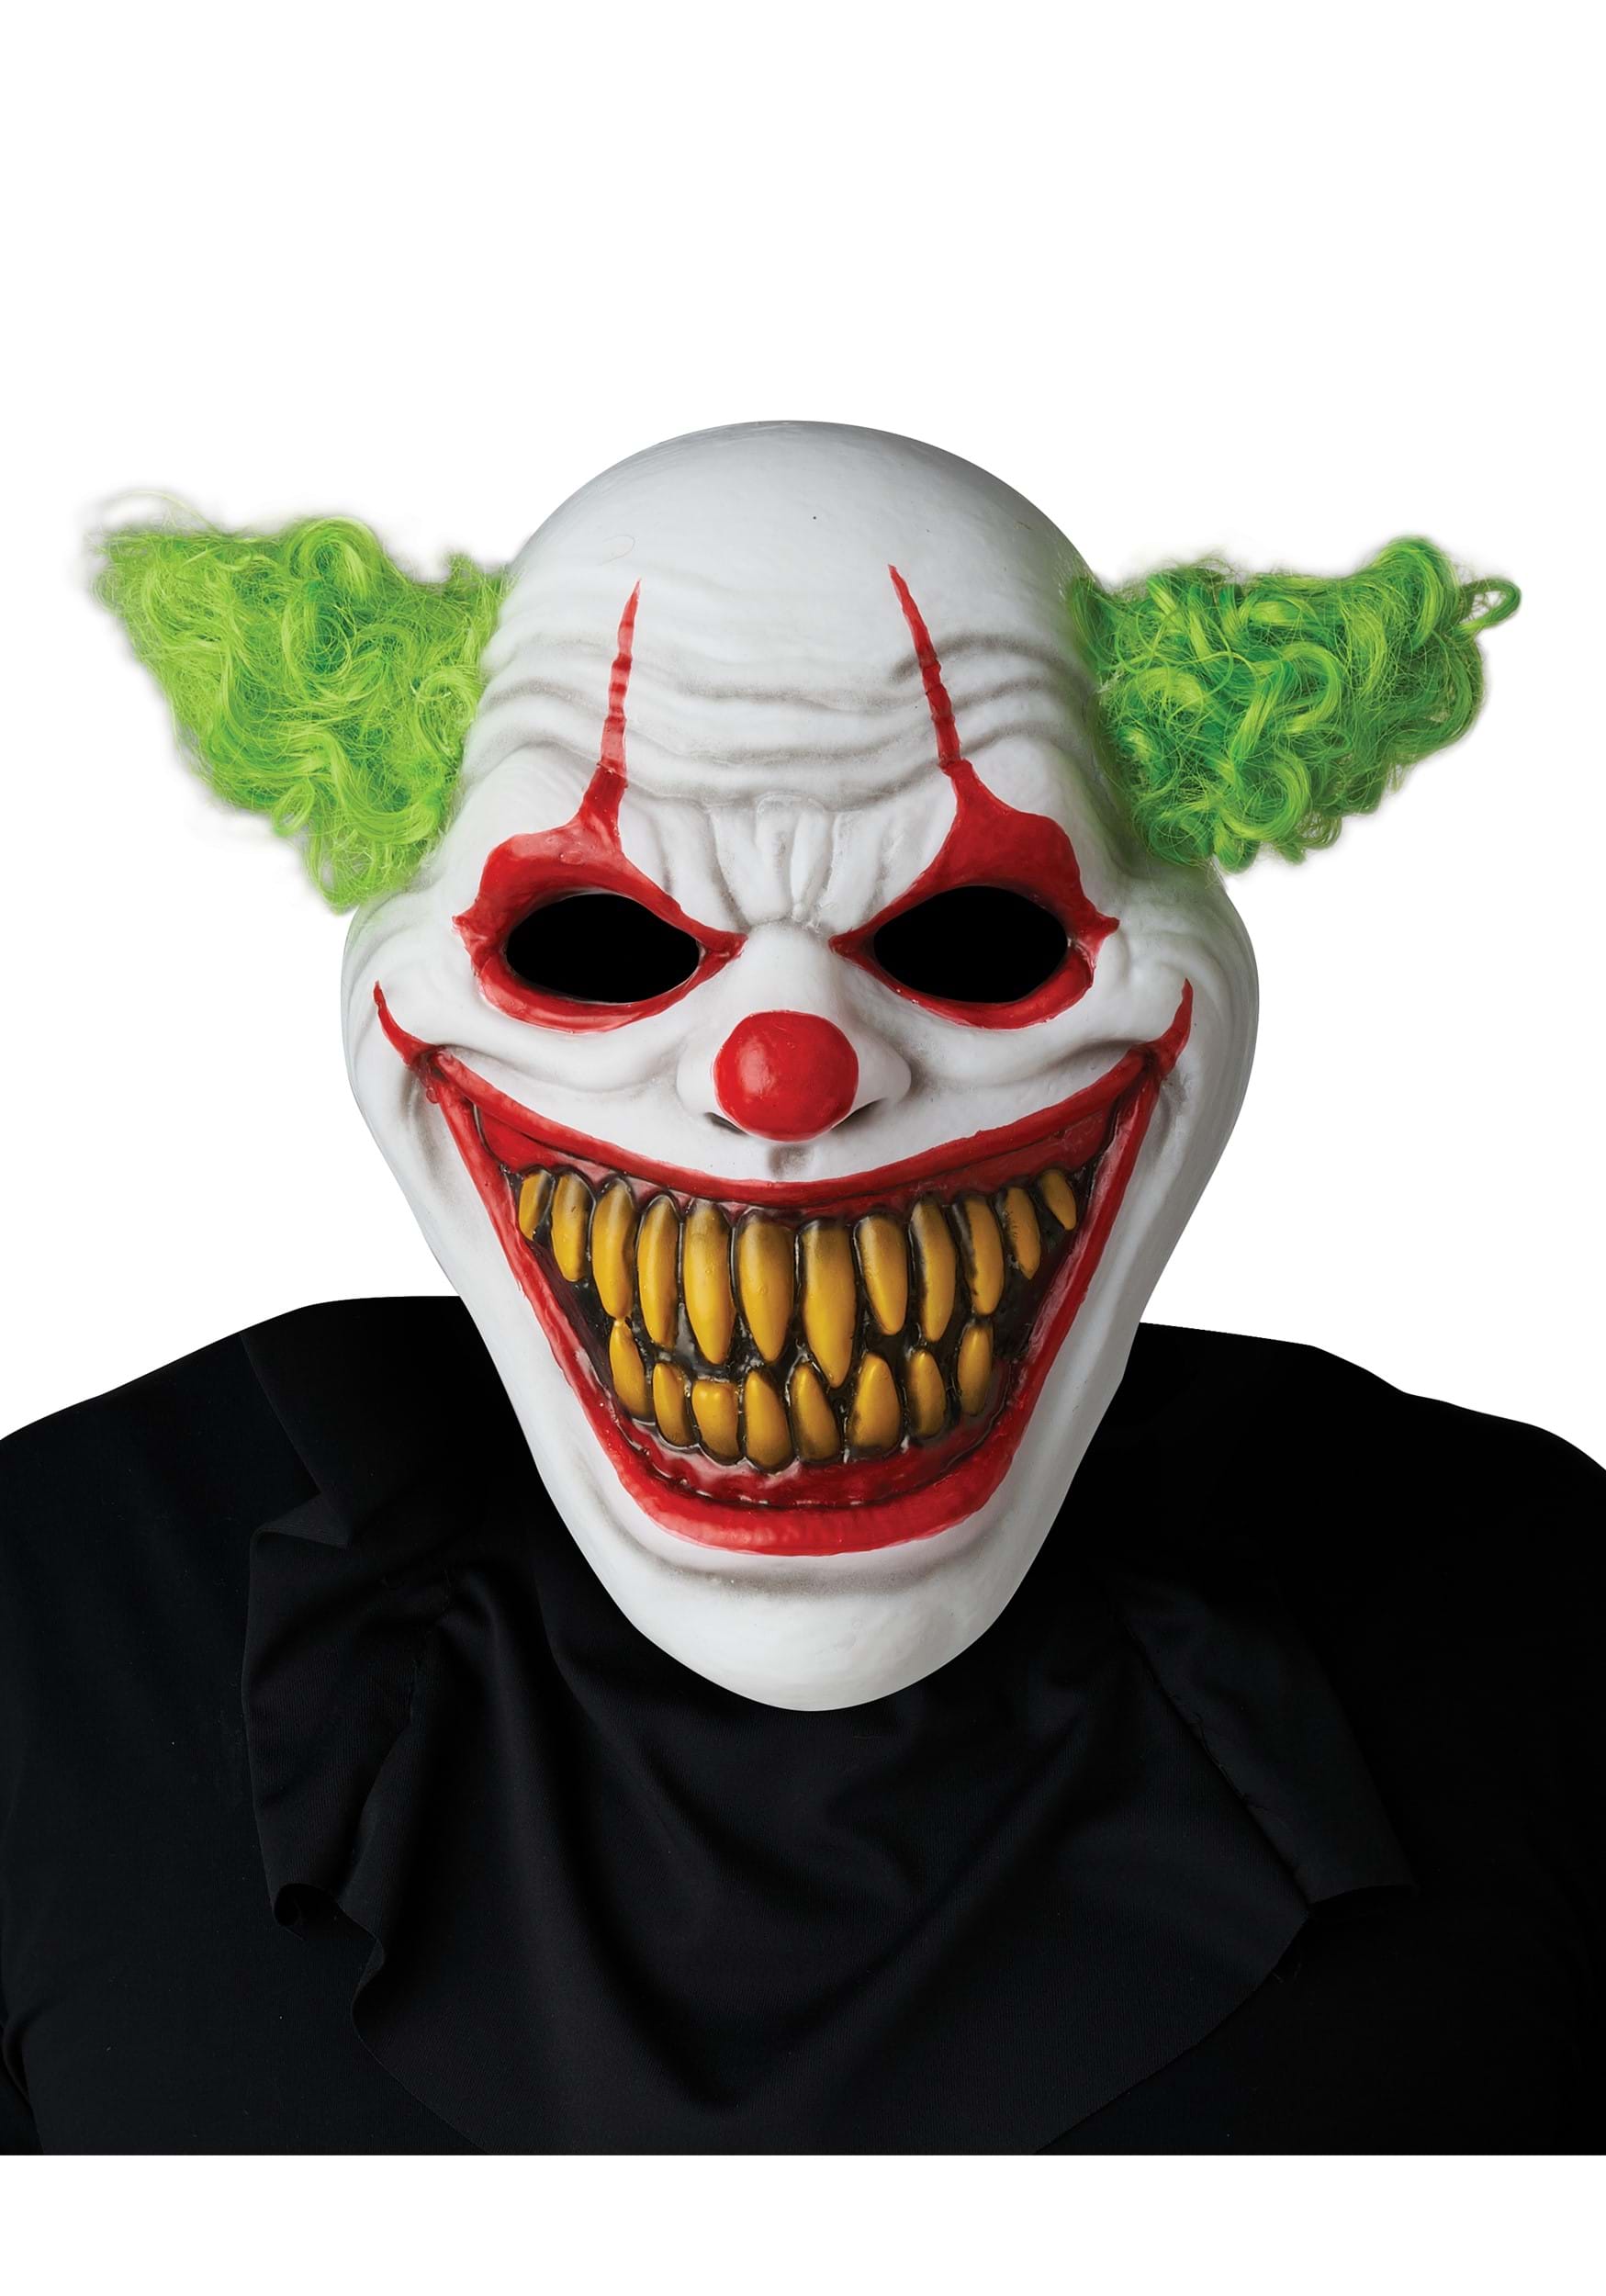 scary clown head mask